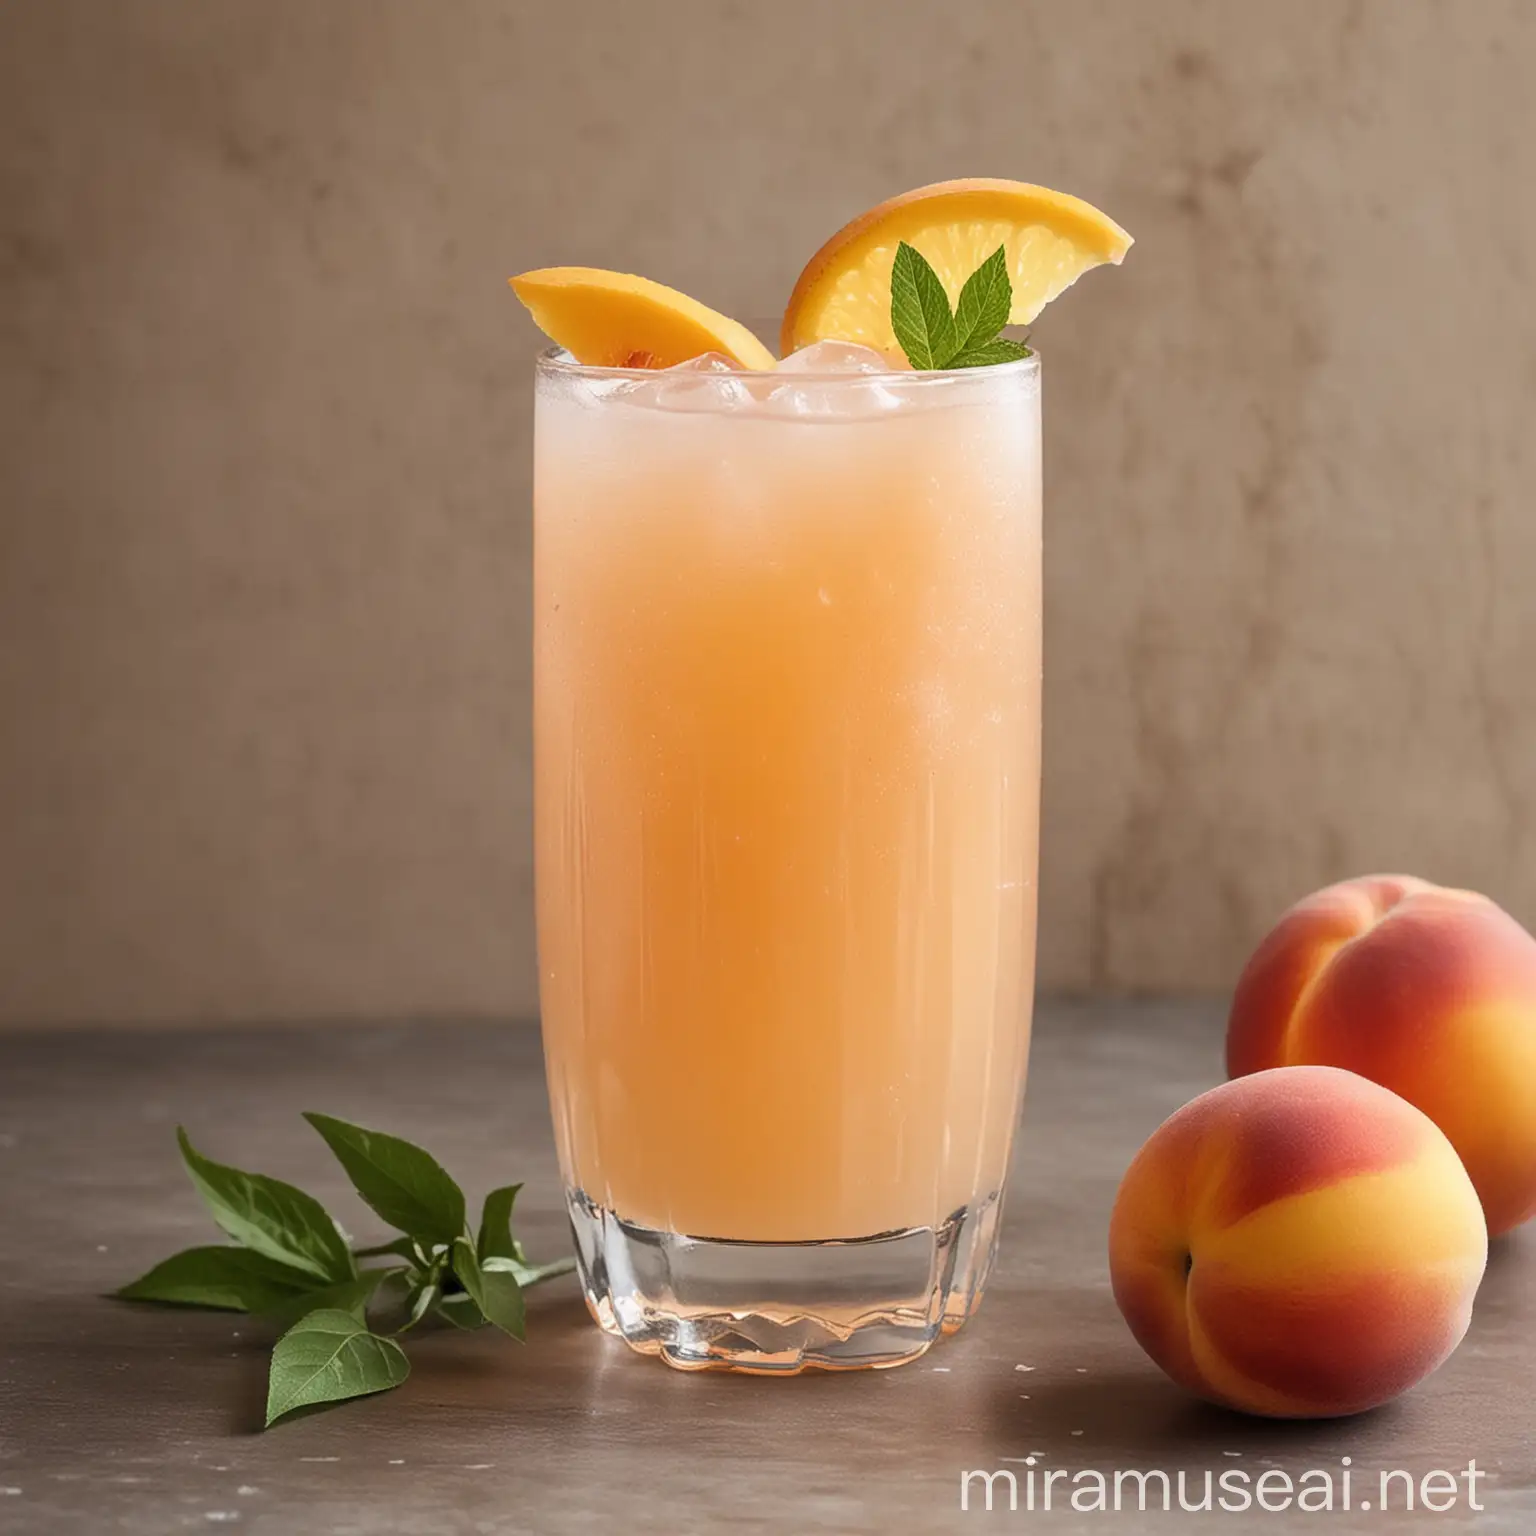 Refreshing Peach Lemonade Drink with Citrus Slices